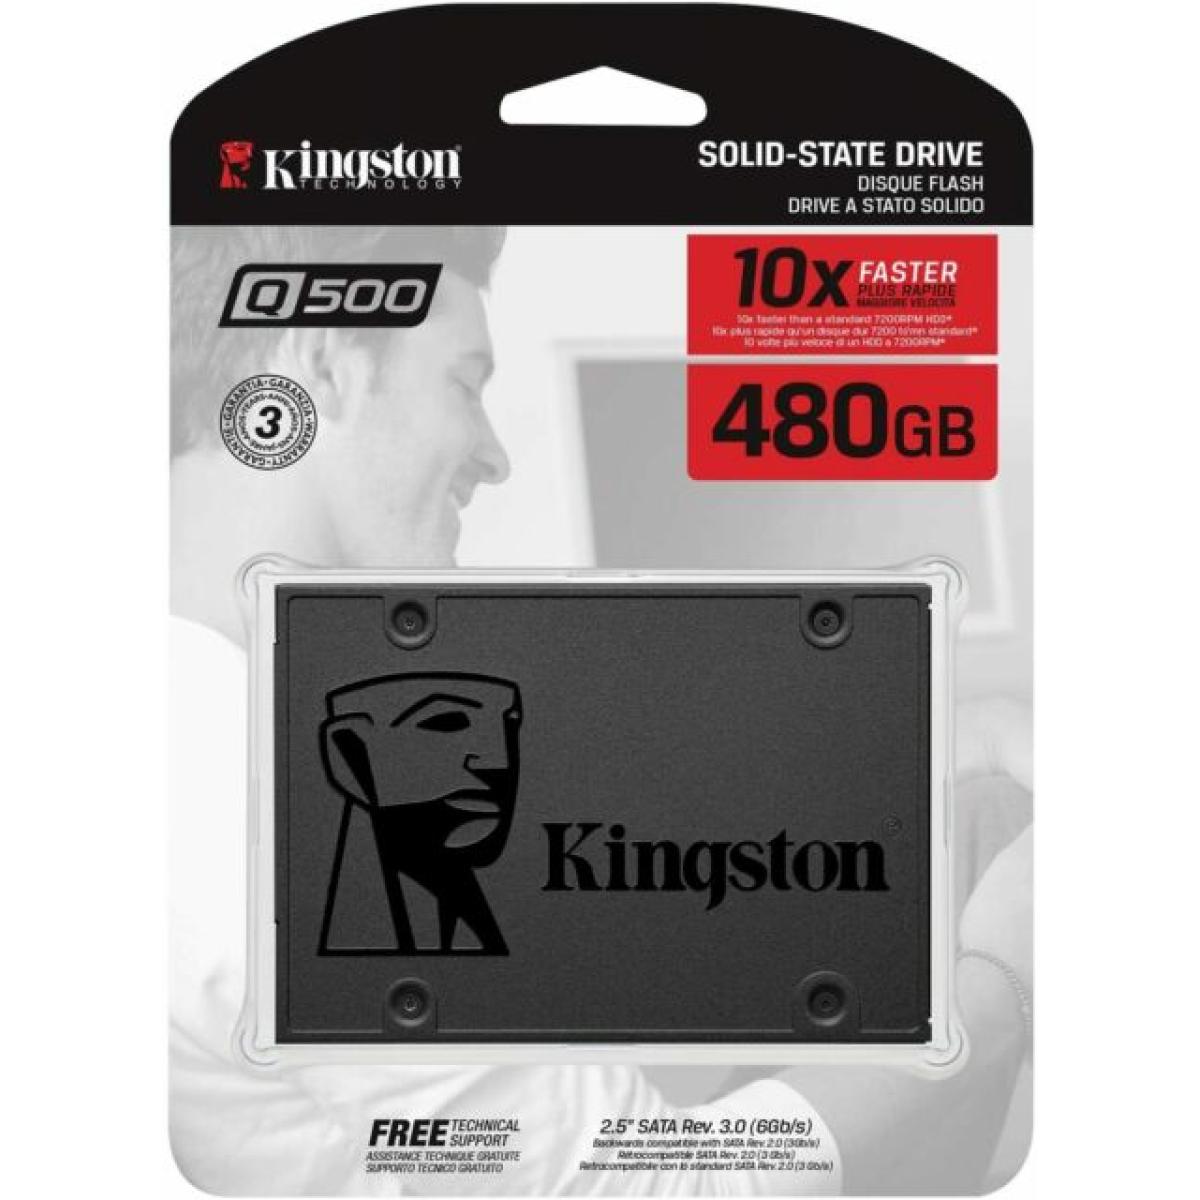 Kingston Q500 2.5 SSD 480GB SATA 3 2.5Inch | Q500 SSD | OS | Jordan